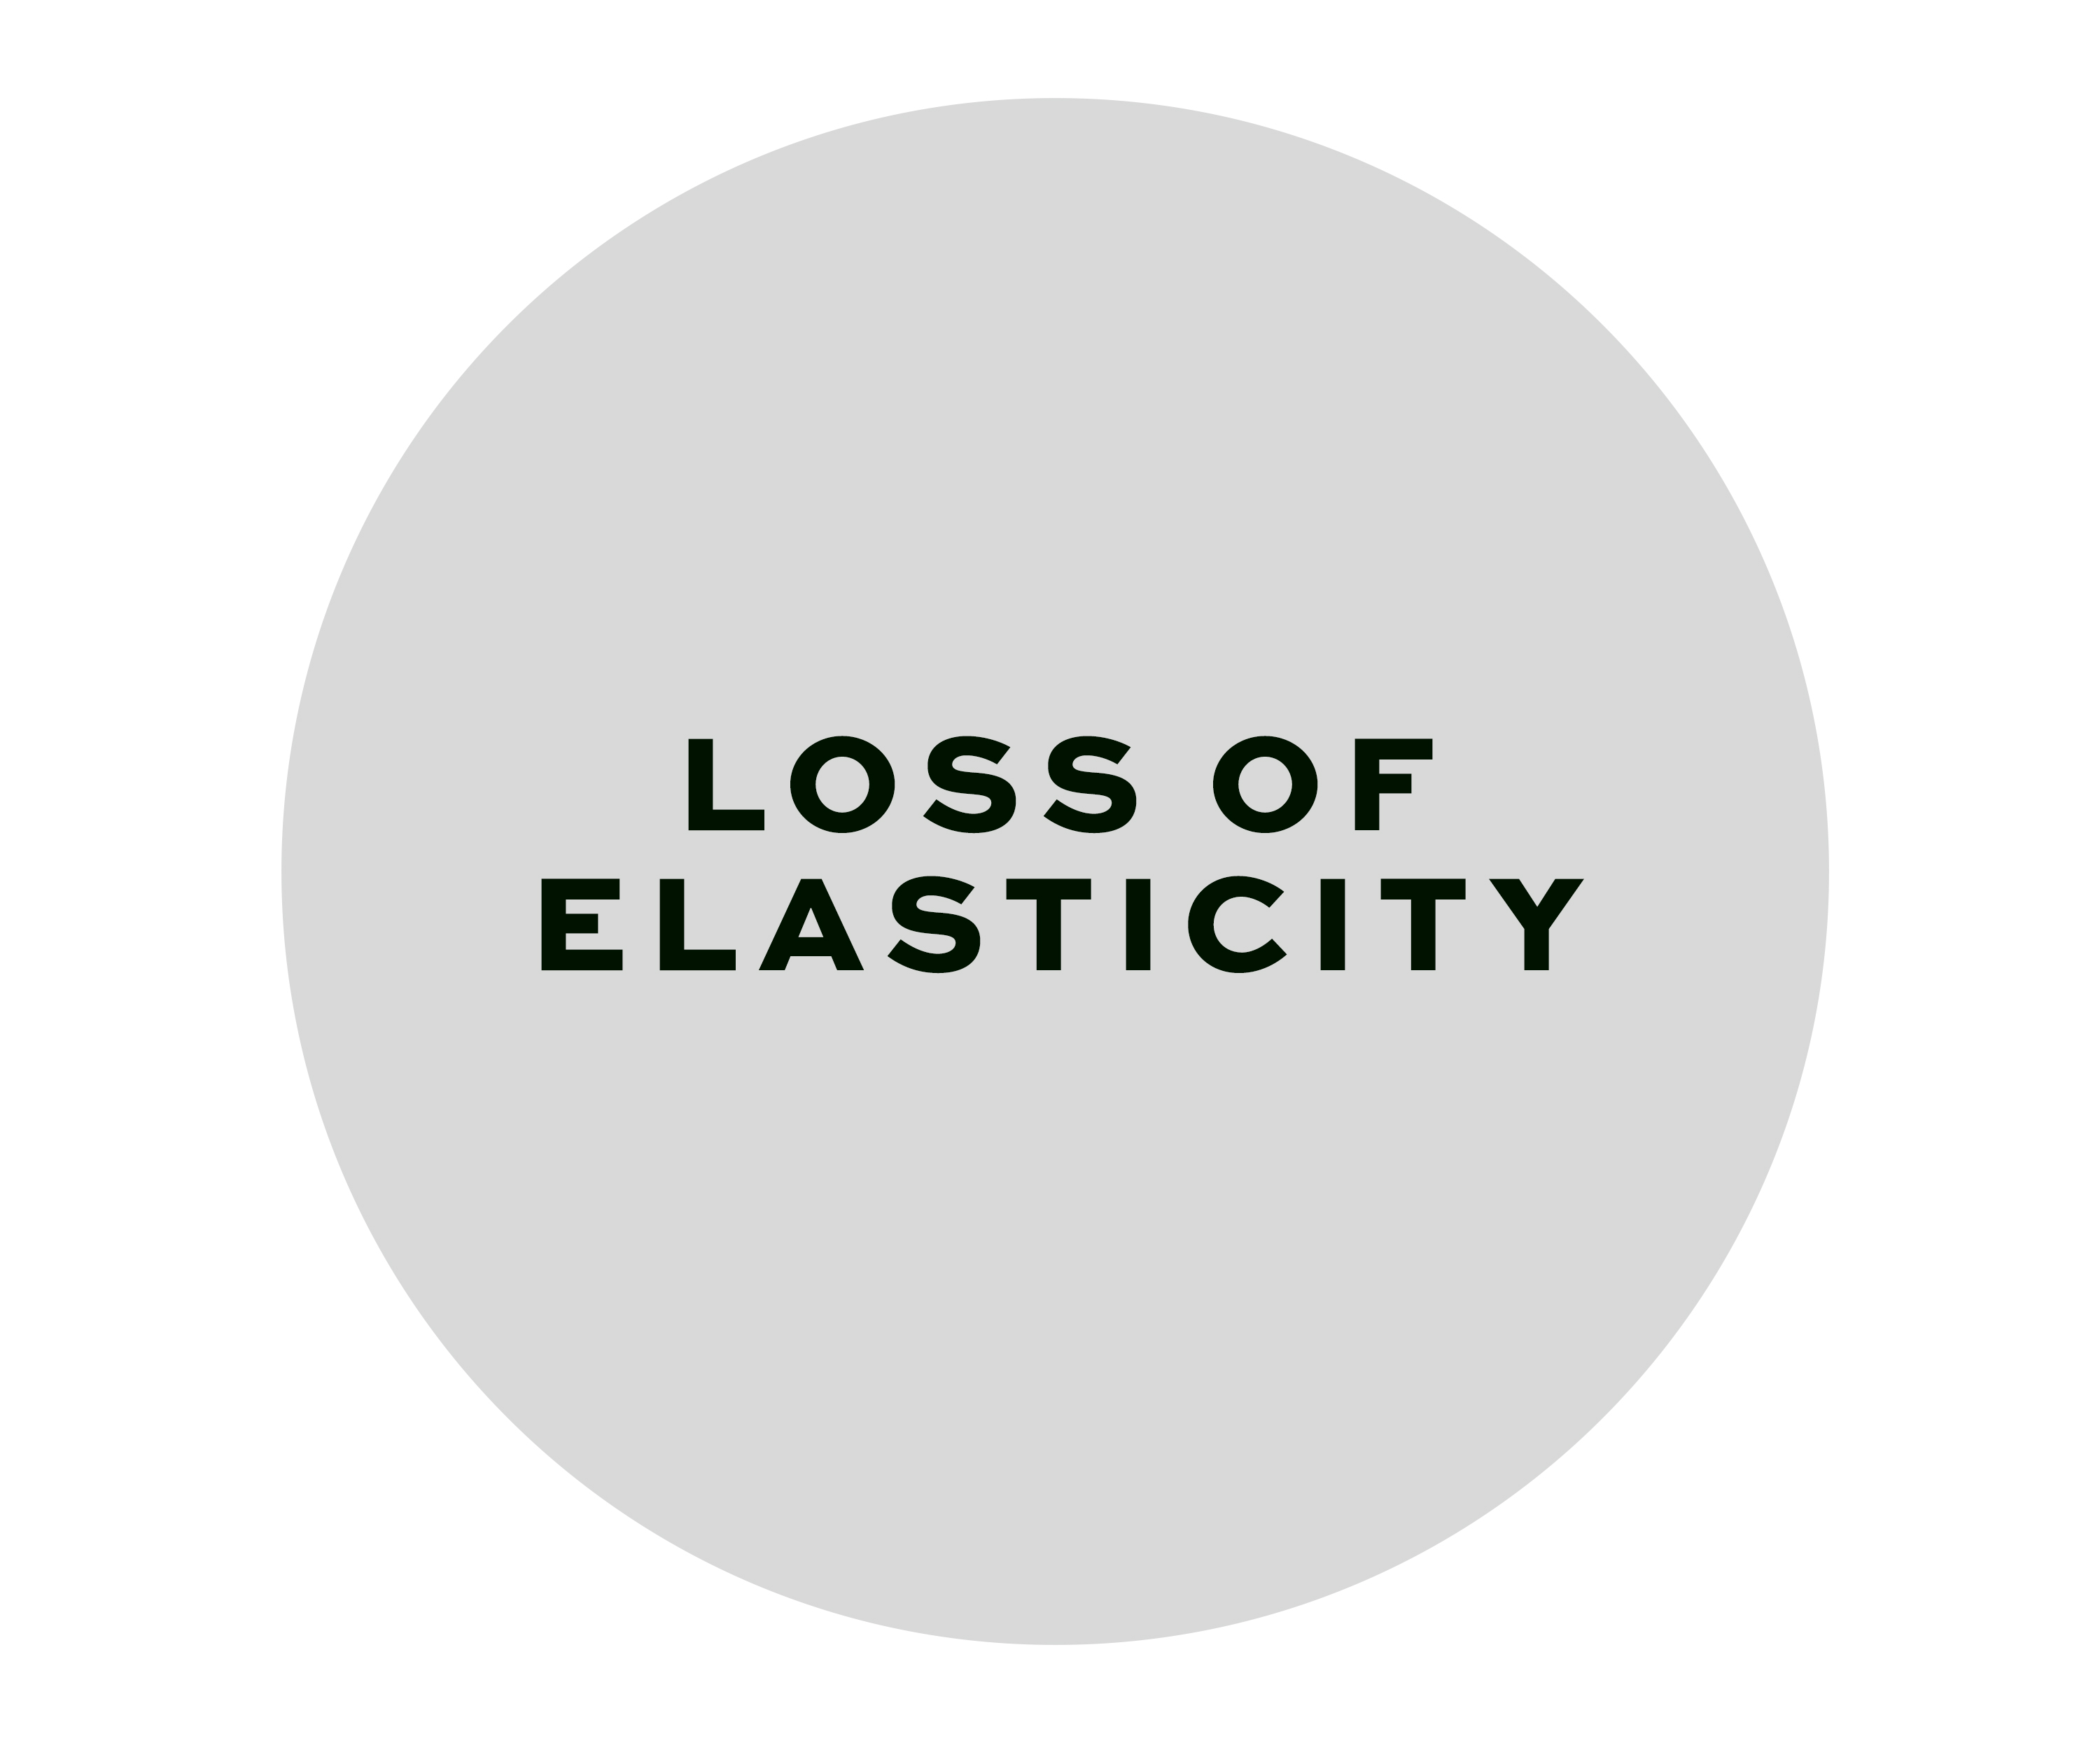 Loss of elasticity